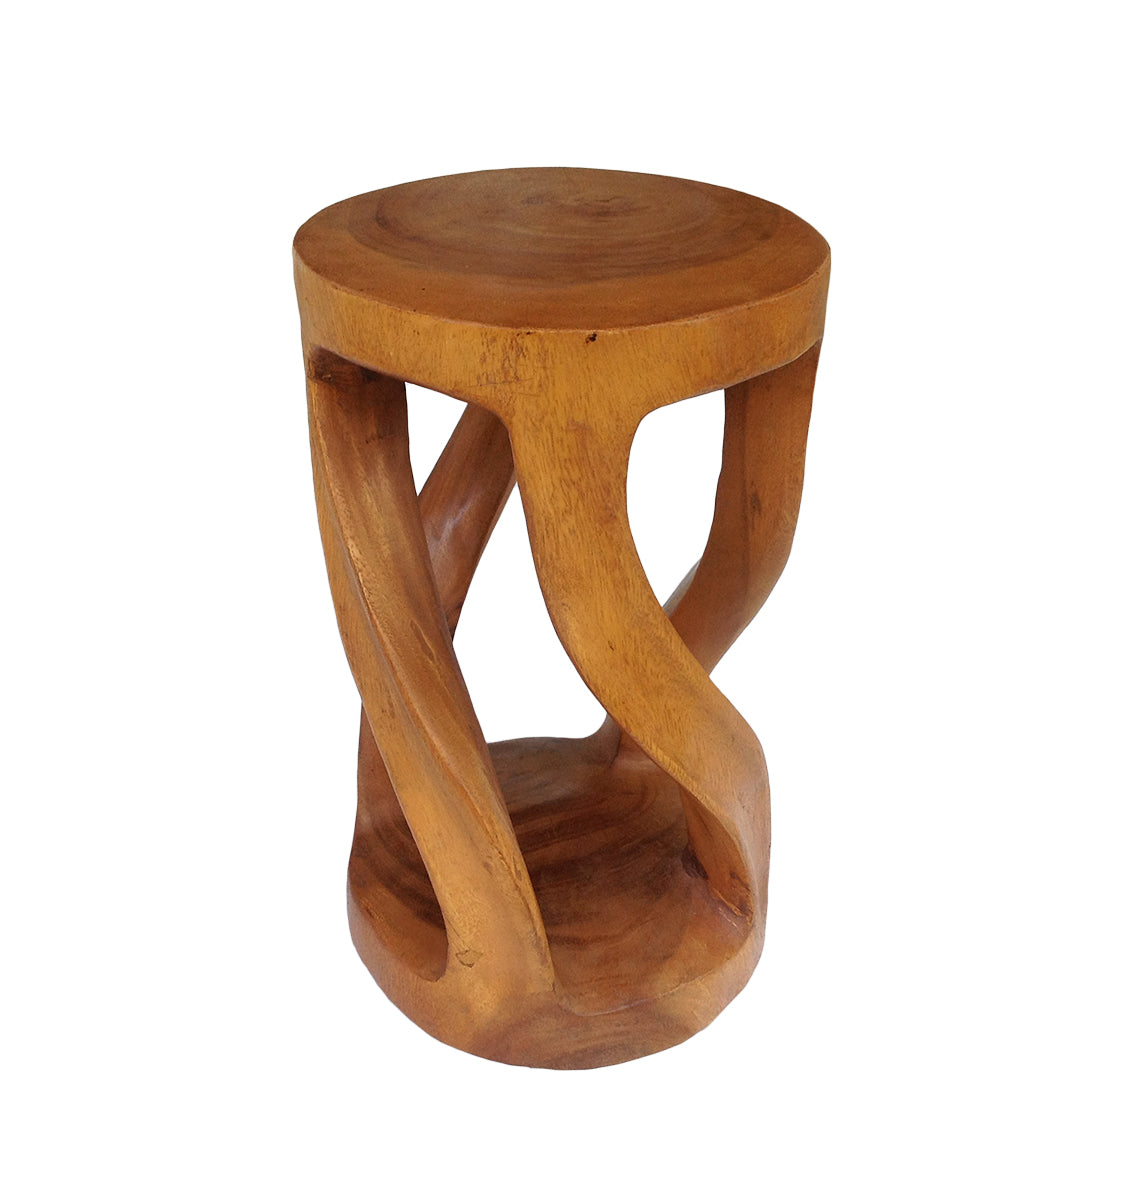 Wood Side Table - Round Top Stool - Vine Twist 20 inch - Tan Brown